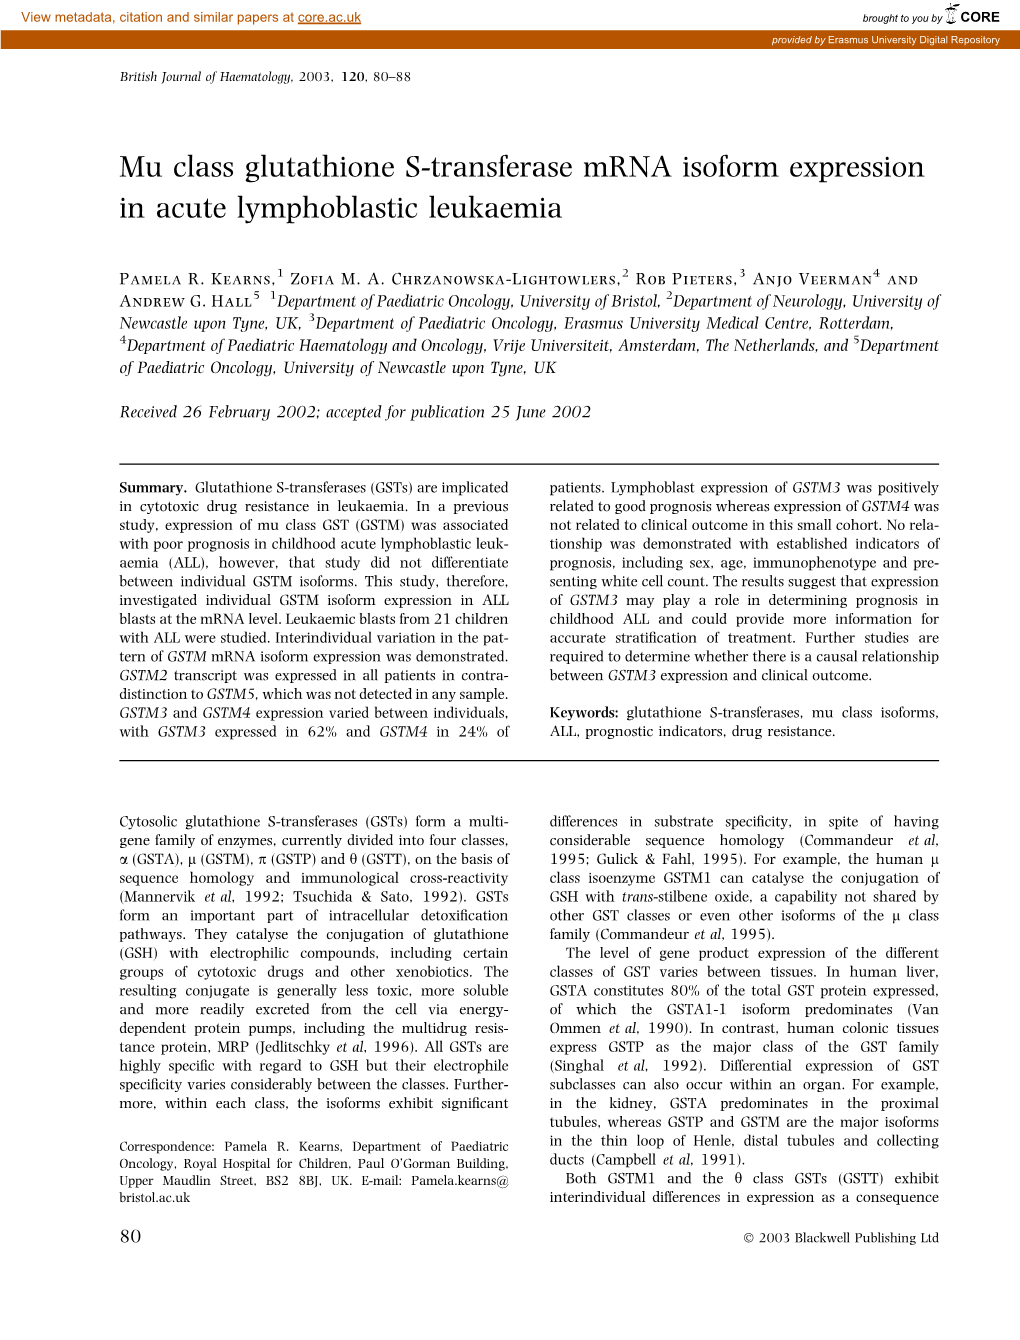 Mu Class Glutathione S-Transferase Mrna Isoform Expression in Acute Lymphoblastic Leukaemia